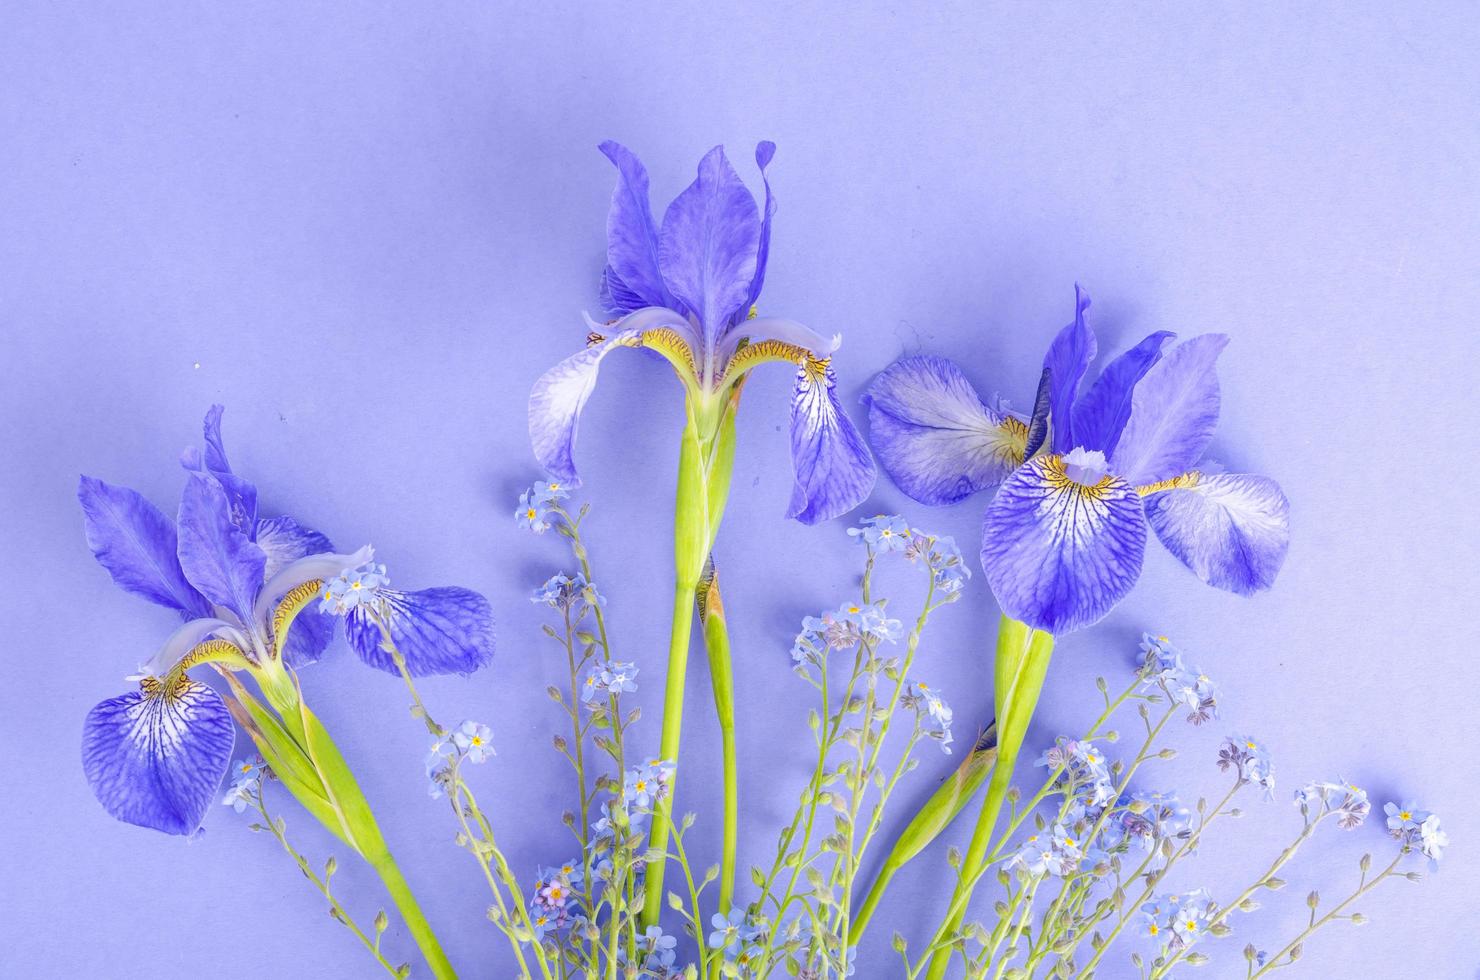 íris frescas de jardim azul sobre fundo de papel brilhante. foto